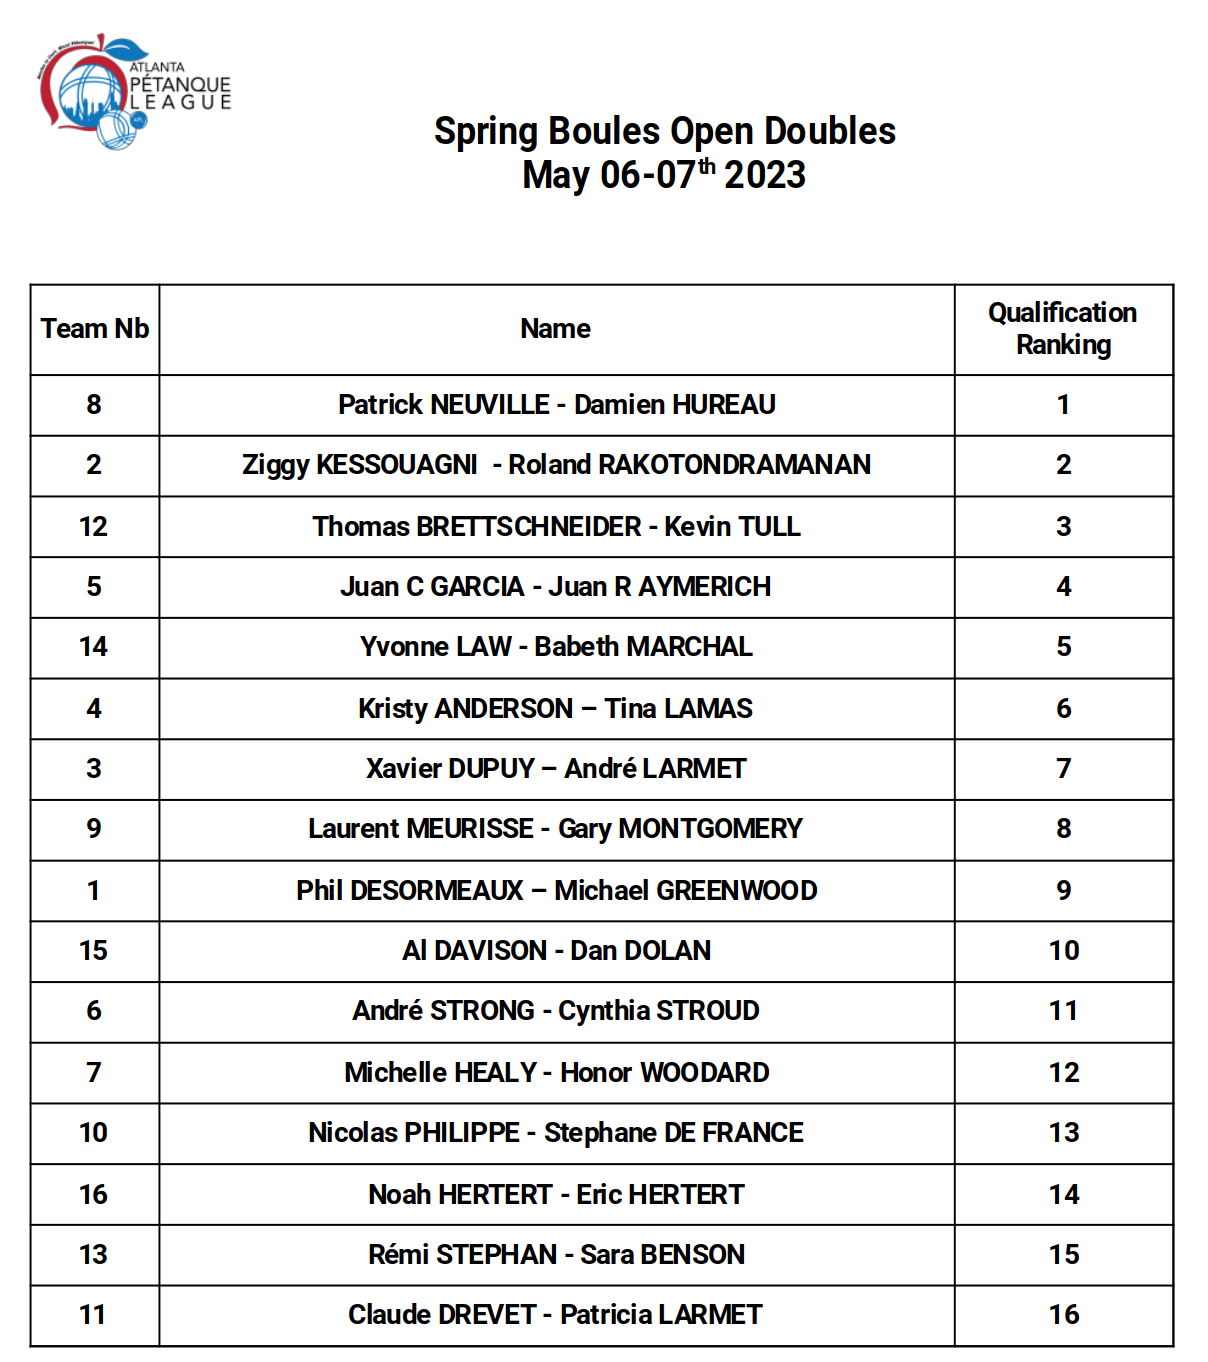 Spring Boules saturday qualification ranking